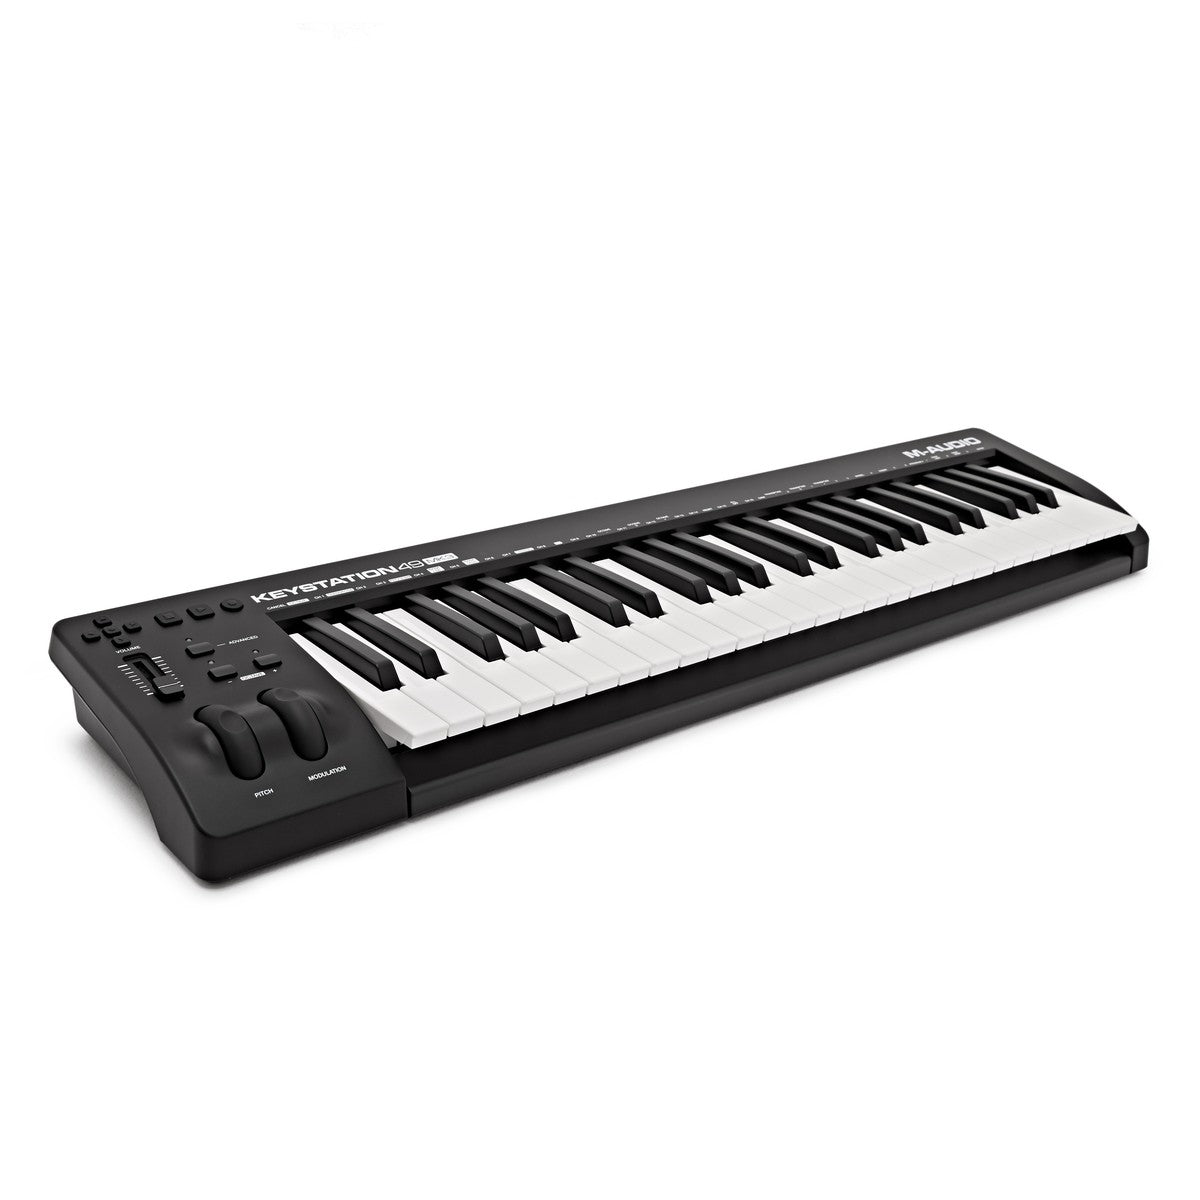 MIDI Keyboard Controller M-Audio Keystation 49 MK3 - Việt Music